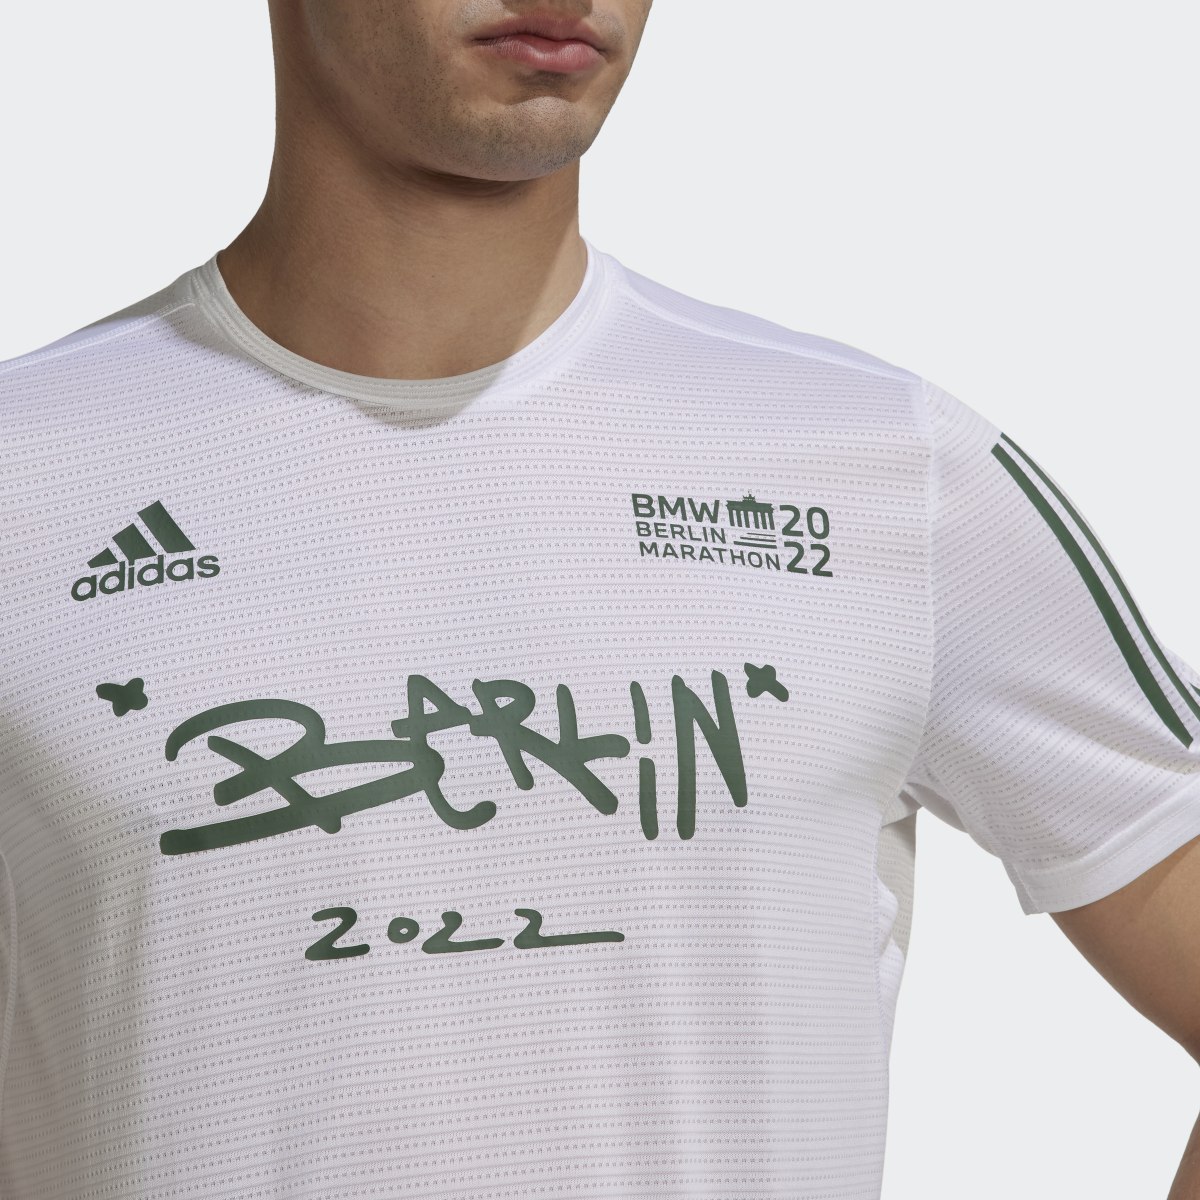 Adidas T-shirt Berlin Marathon 2022. 8